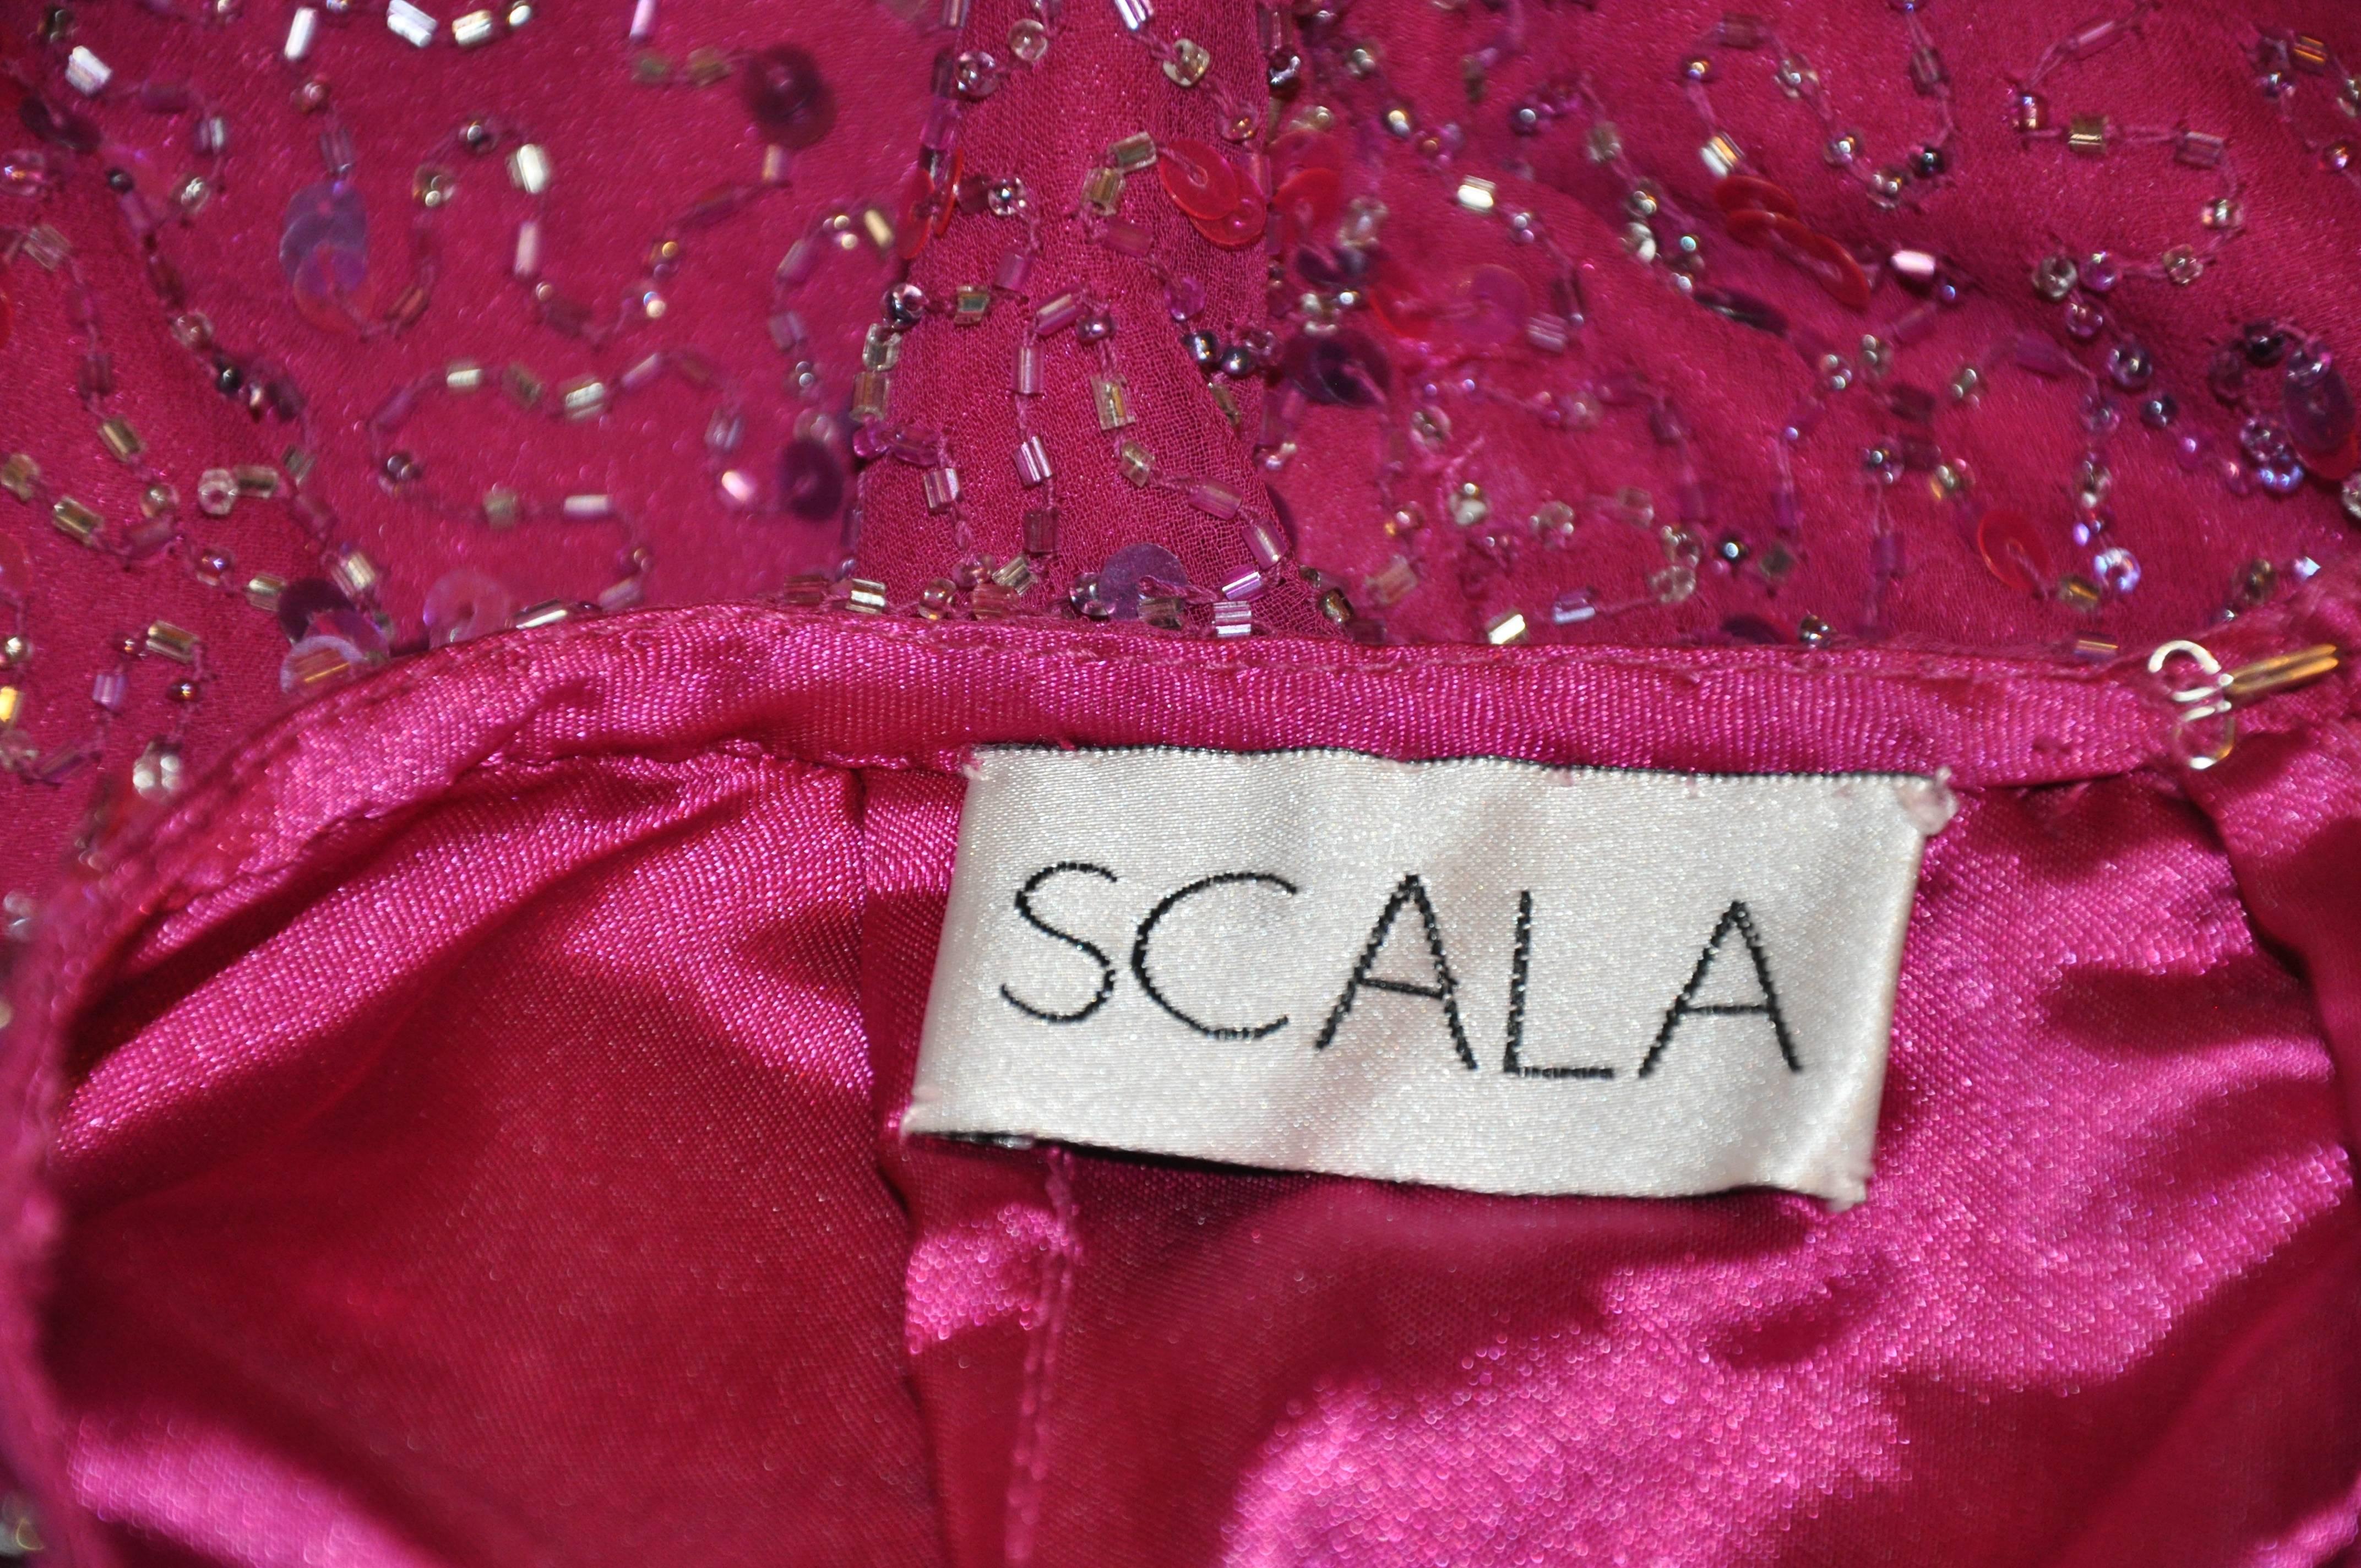 scala body